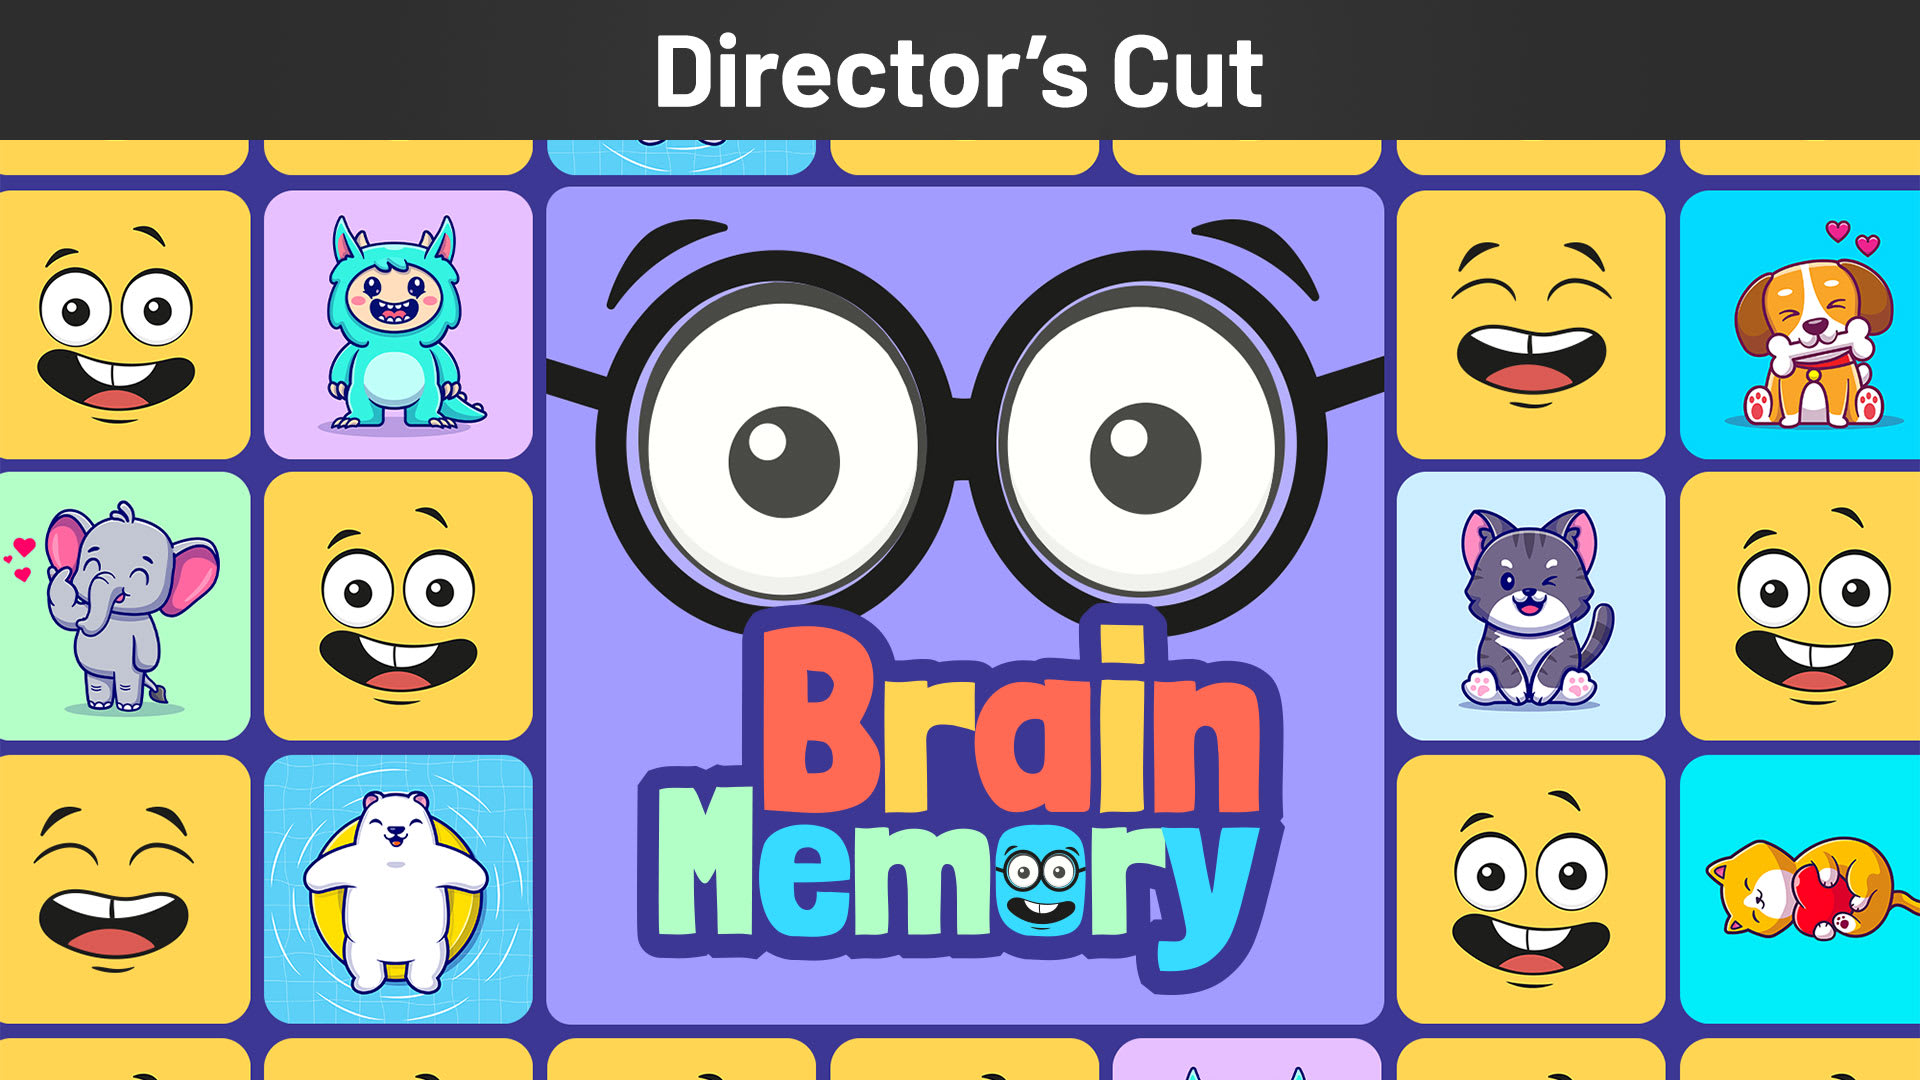 Brain Memory Director's Cut 1